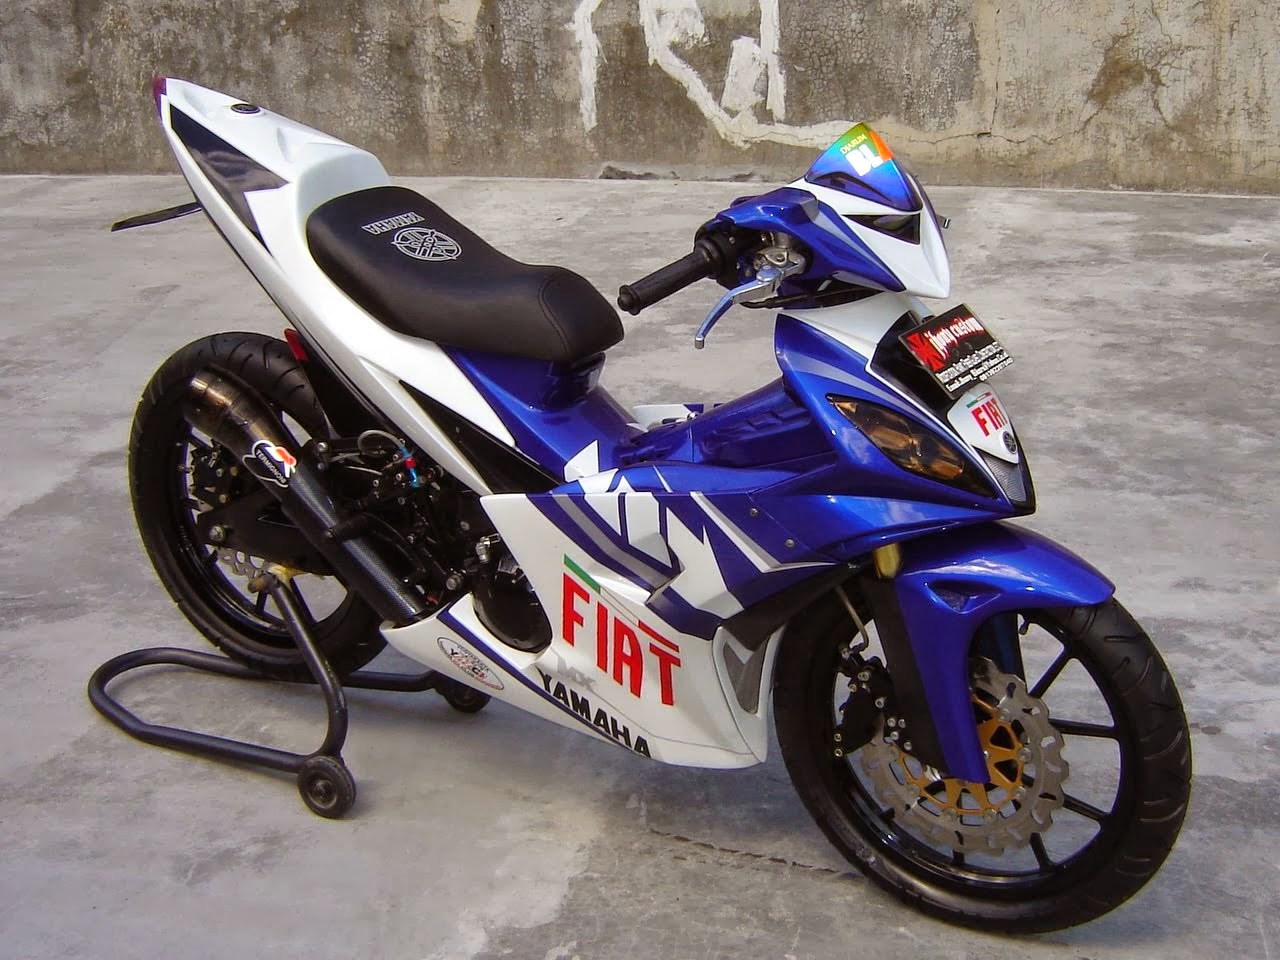 Modifikasi Motor  Yamaha  Force  One Thecitycyclist